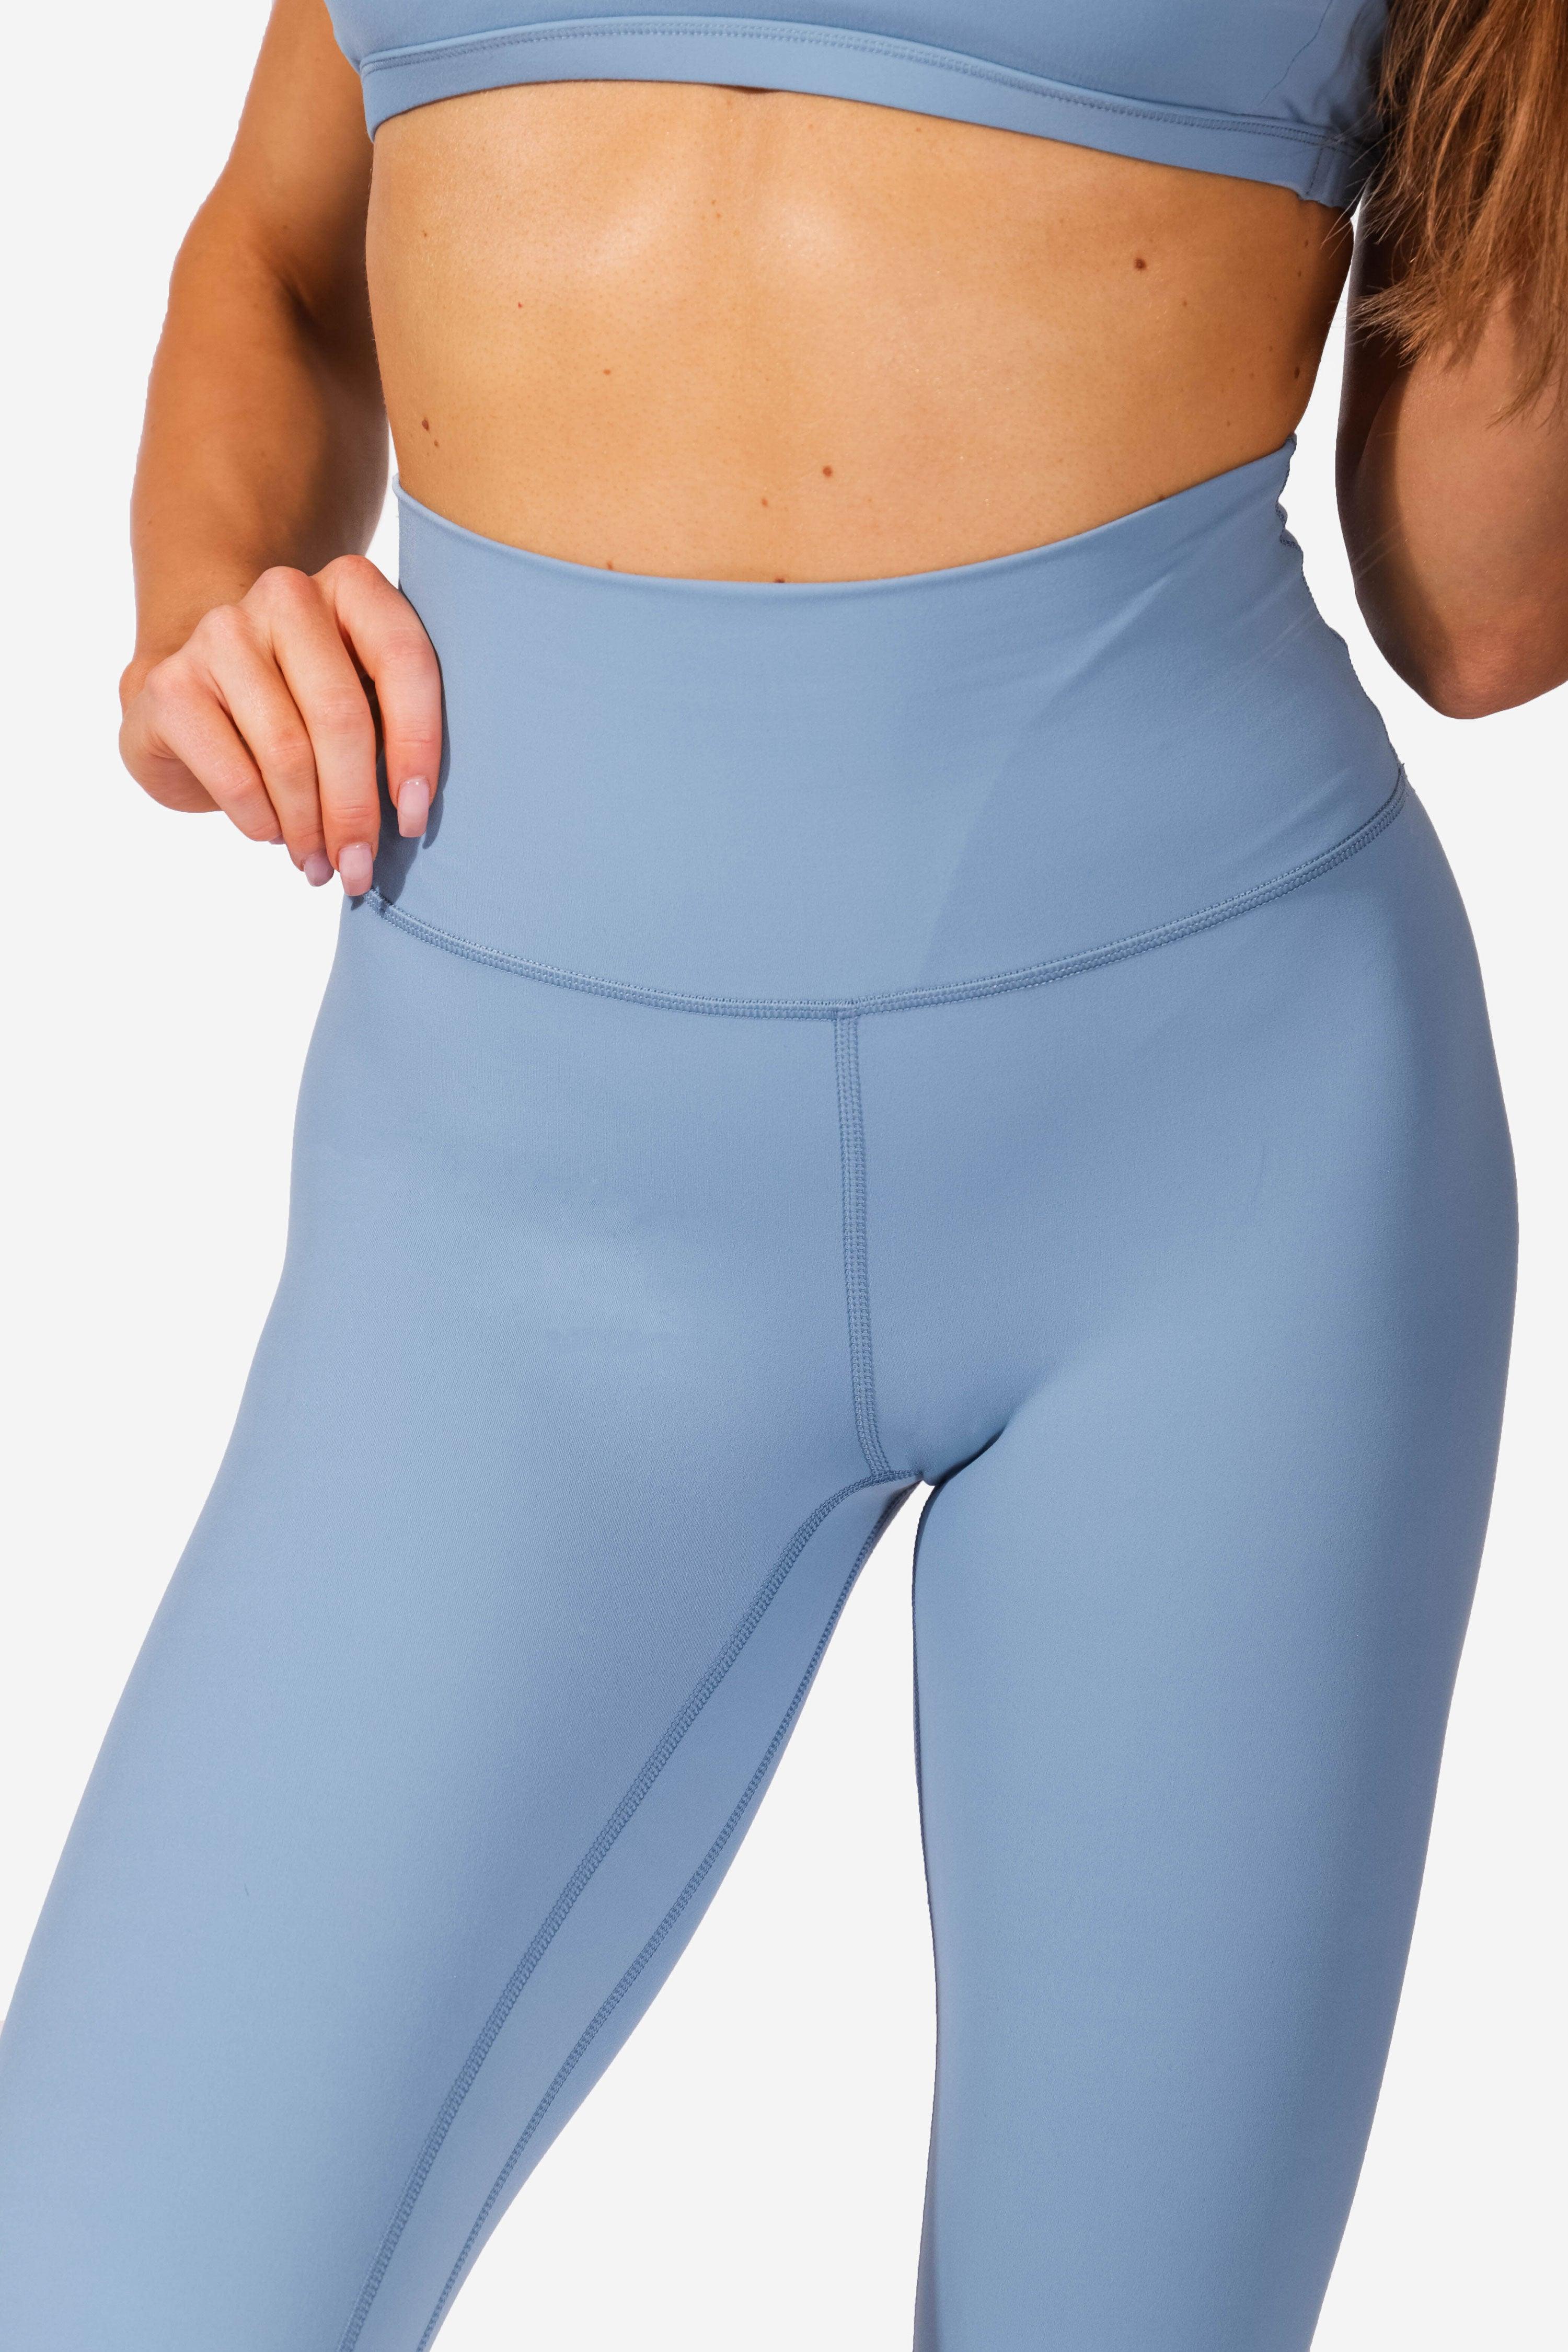 TRE Sportswear Ladies Dry Fit 3 Quarter High Waist Yoga Pant